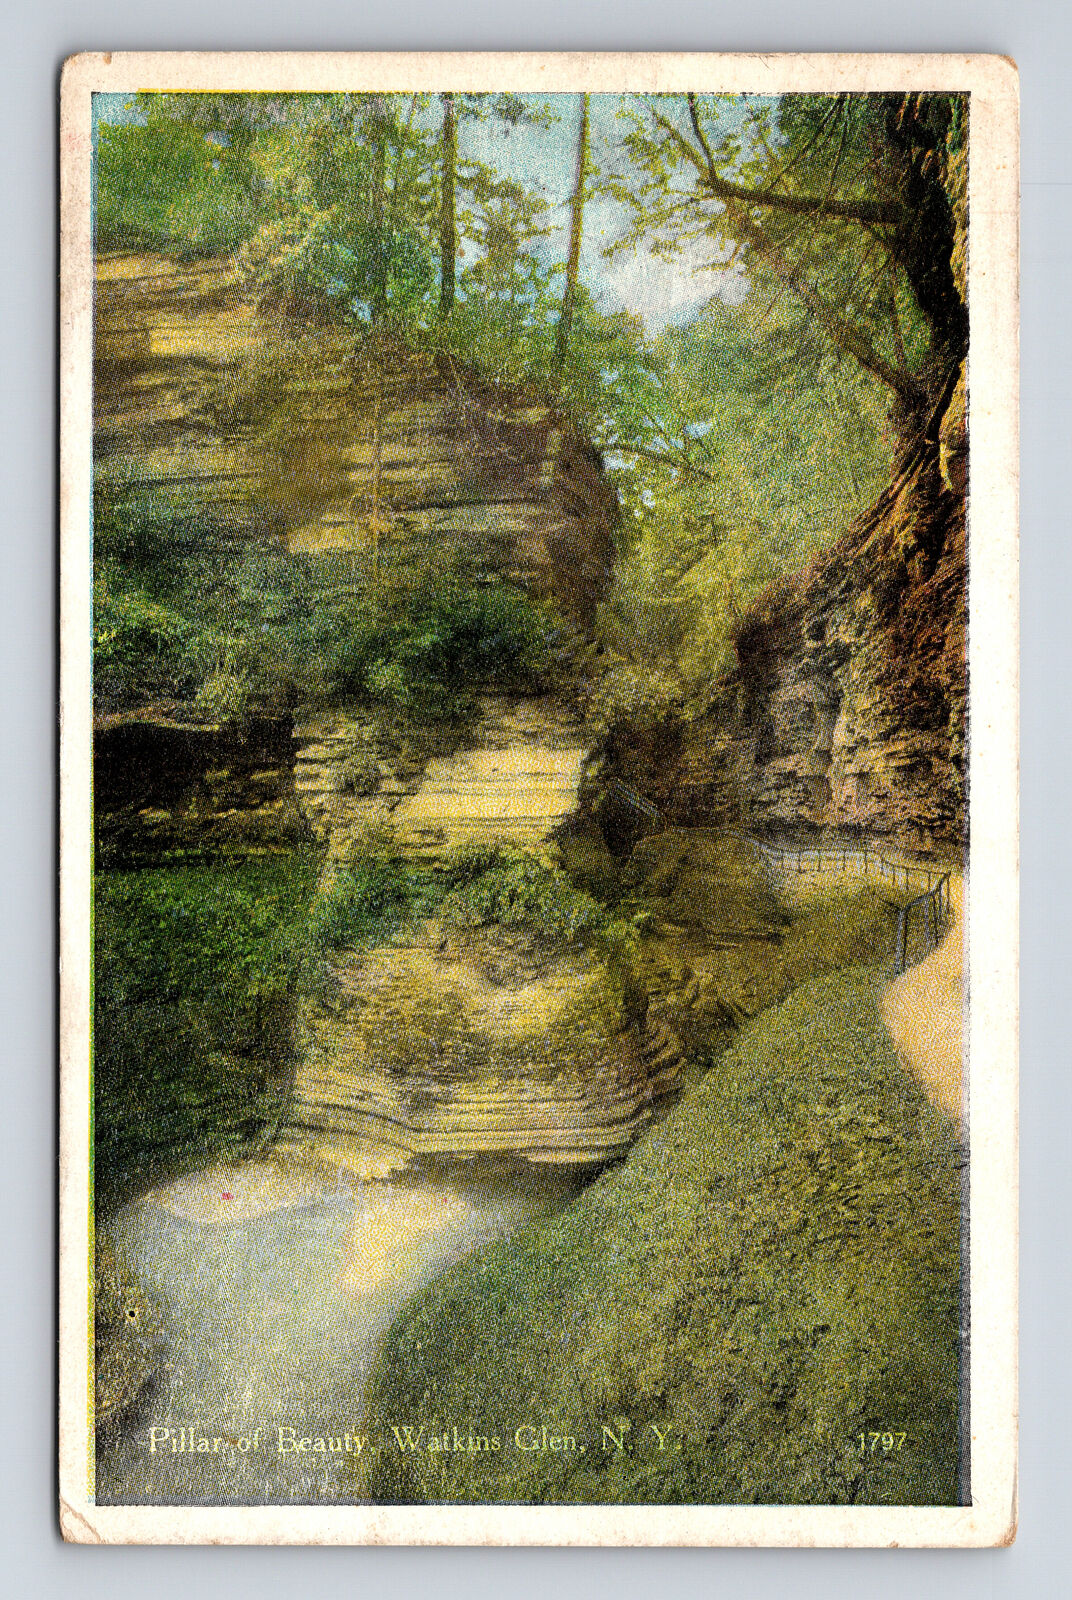 1927 Scenic View Pillar of Beauty Watkins Glen New York NY Geo V Millar Postcard